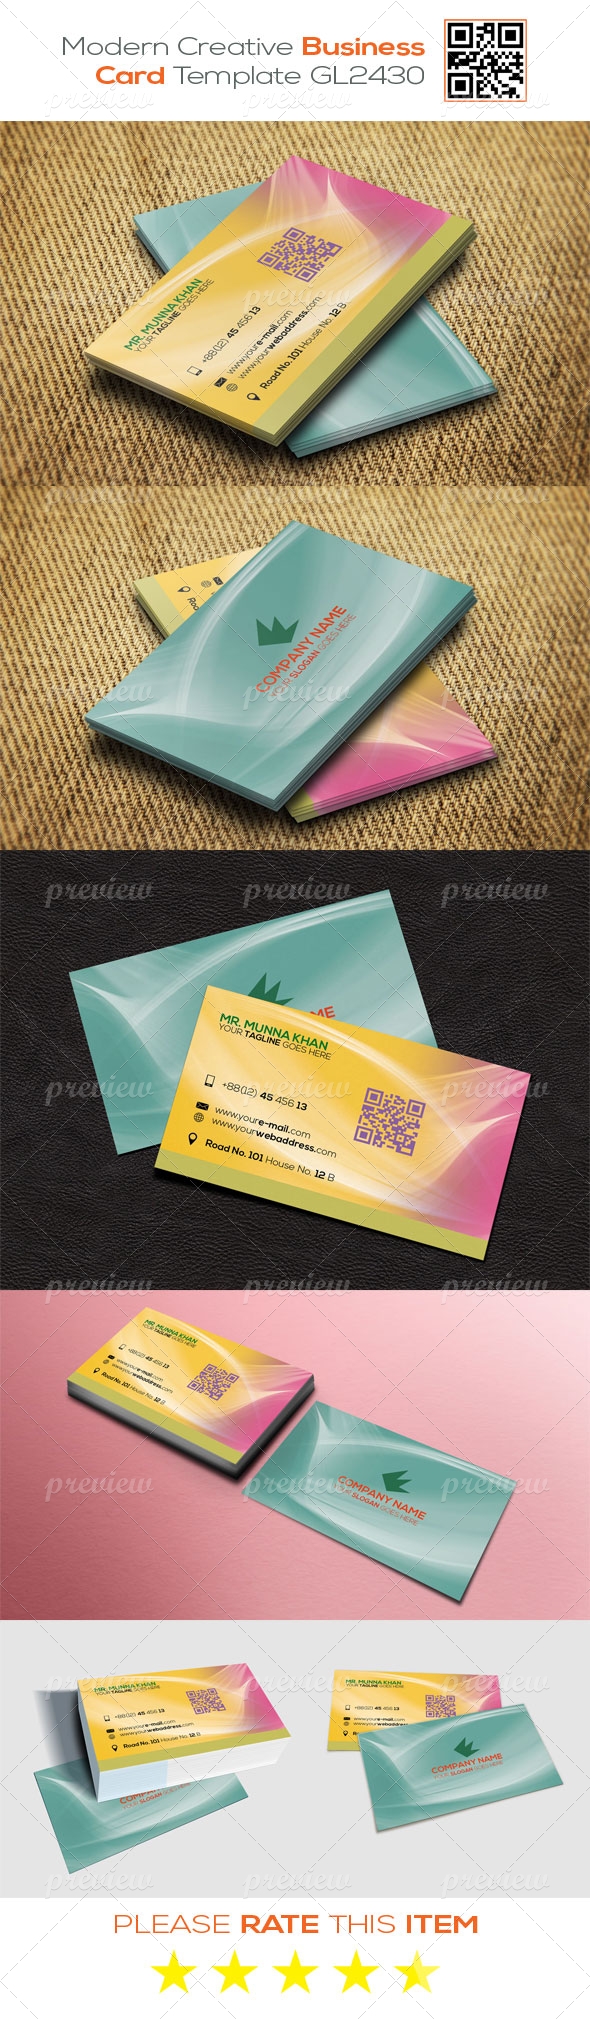 Modern Creative Business Card Template GL2430